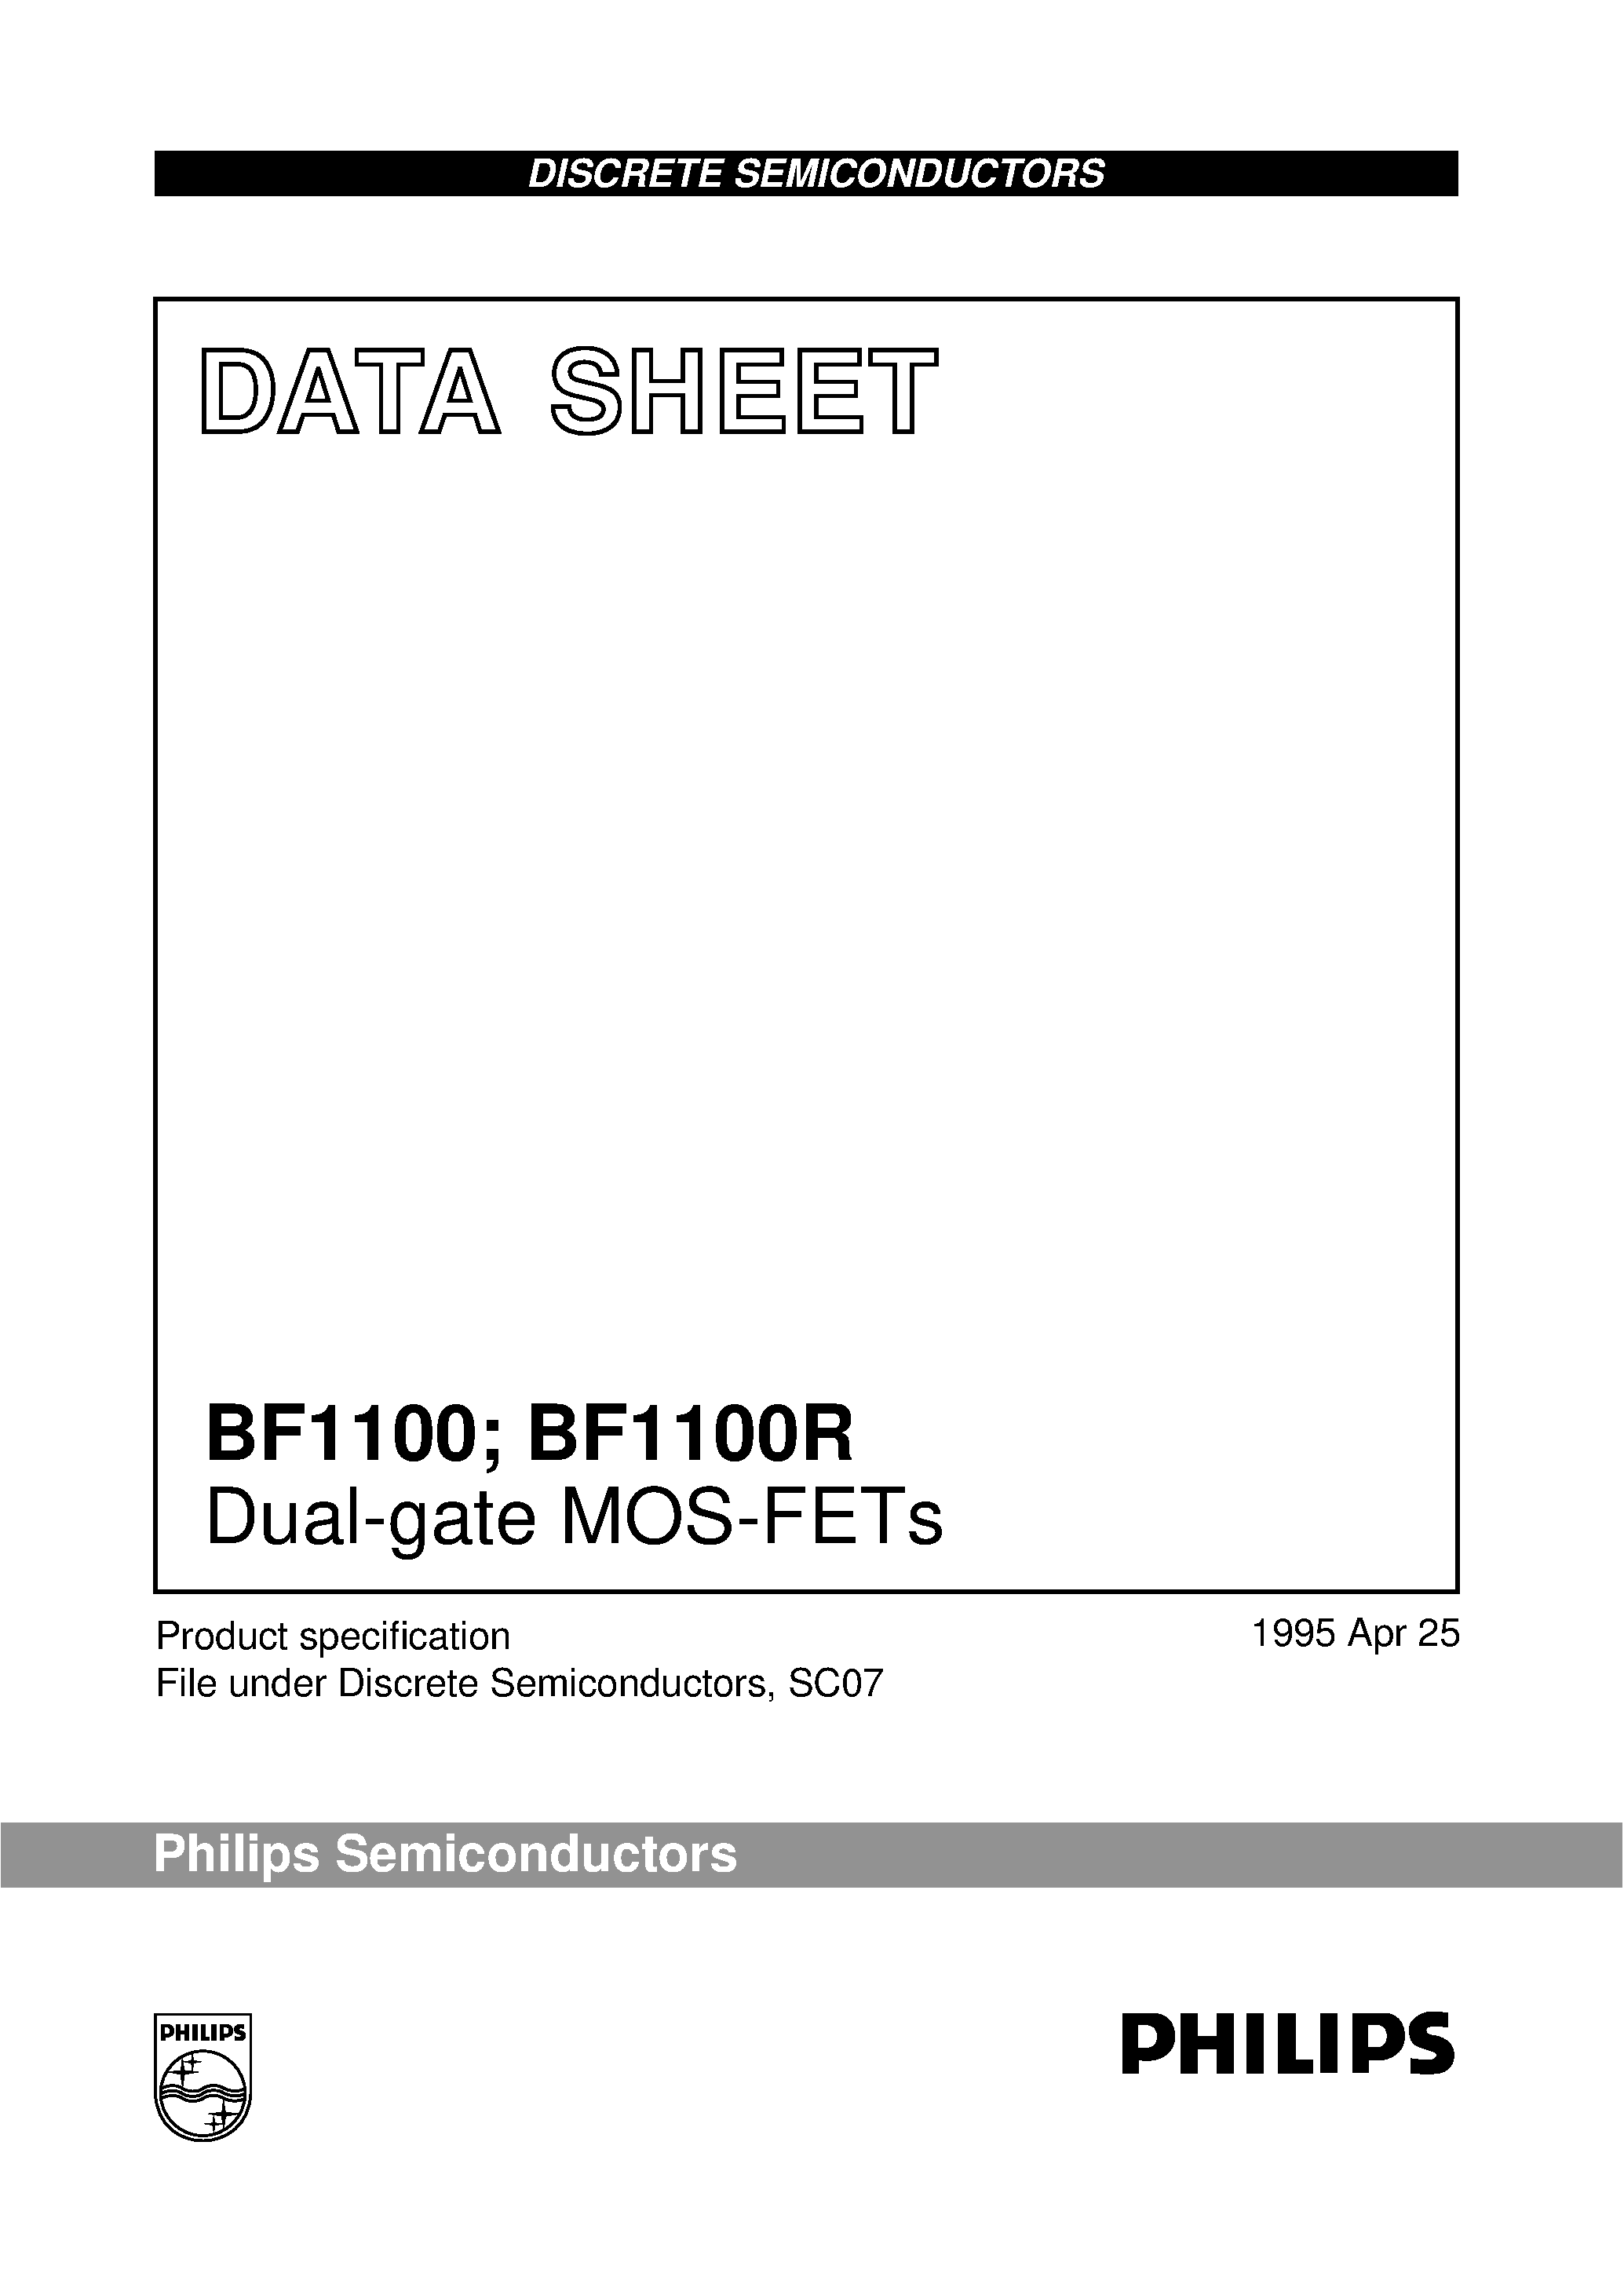 Datasheet BF1100R - Dual-gate MOS-FETs page 1